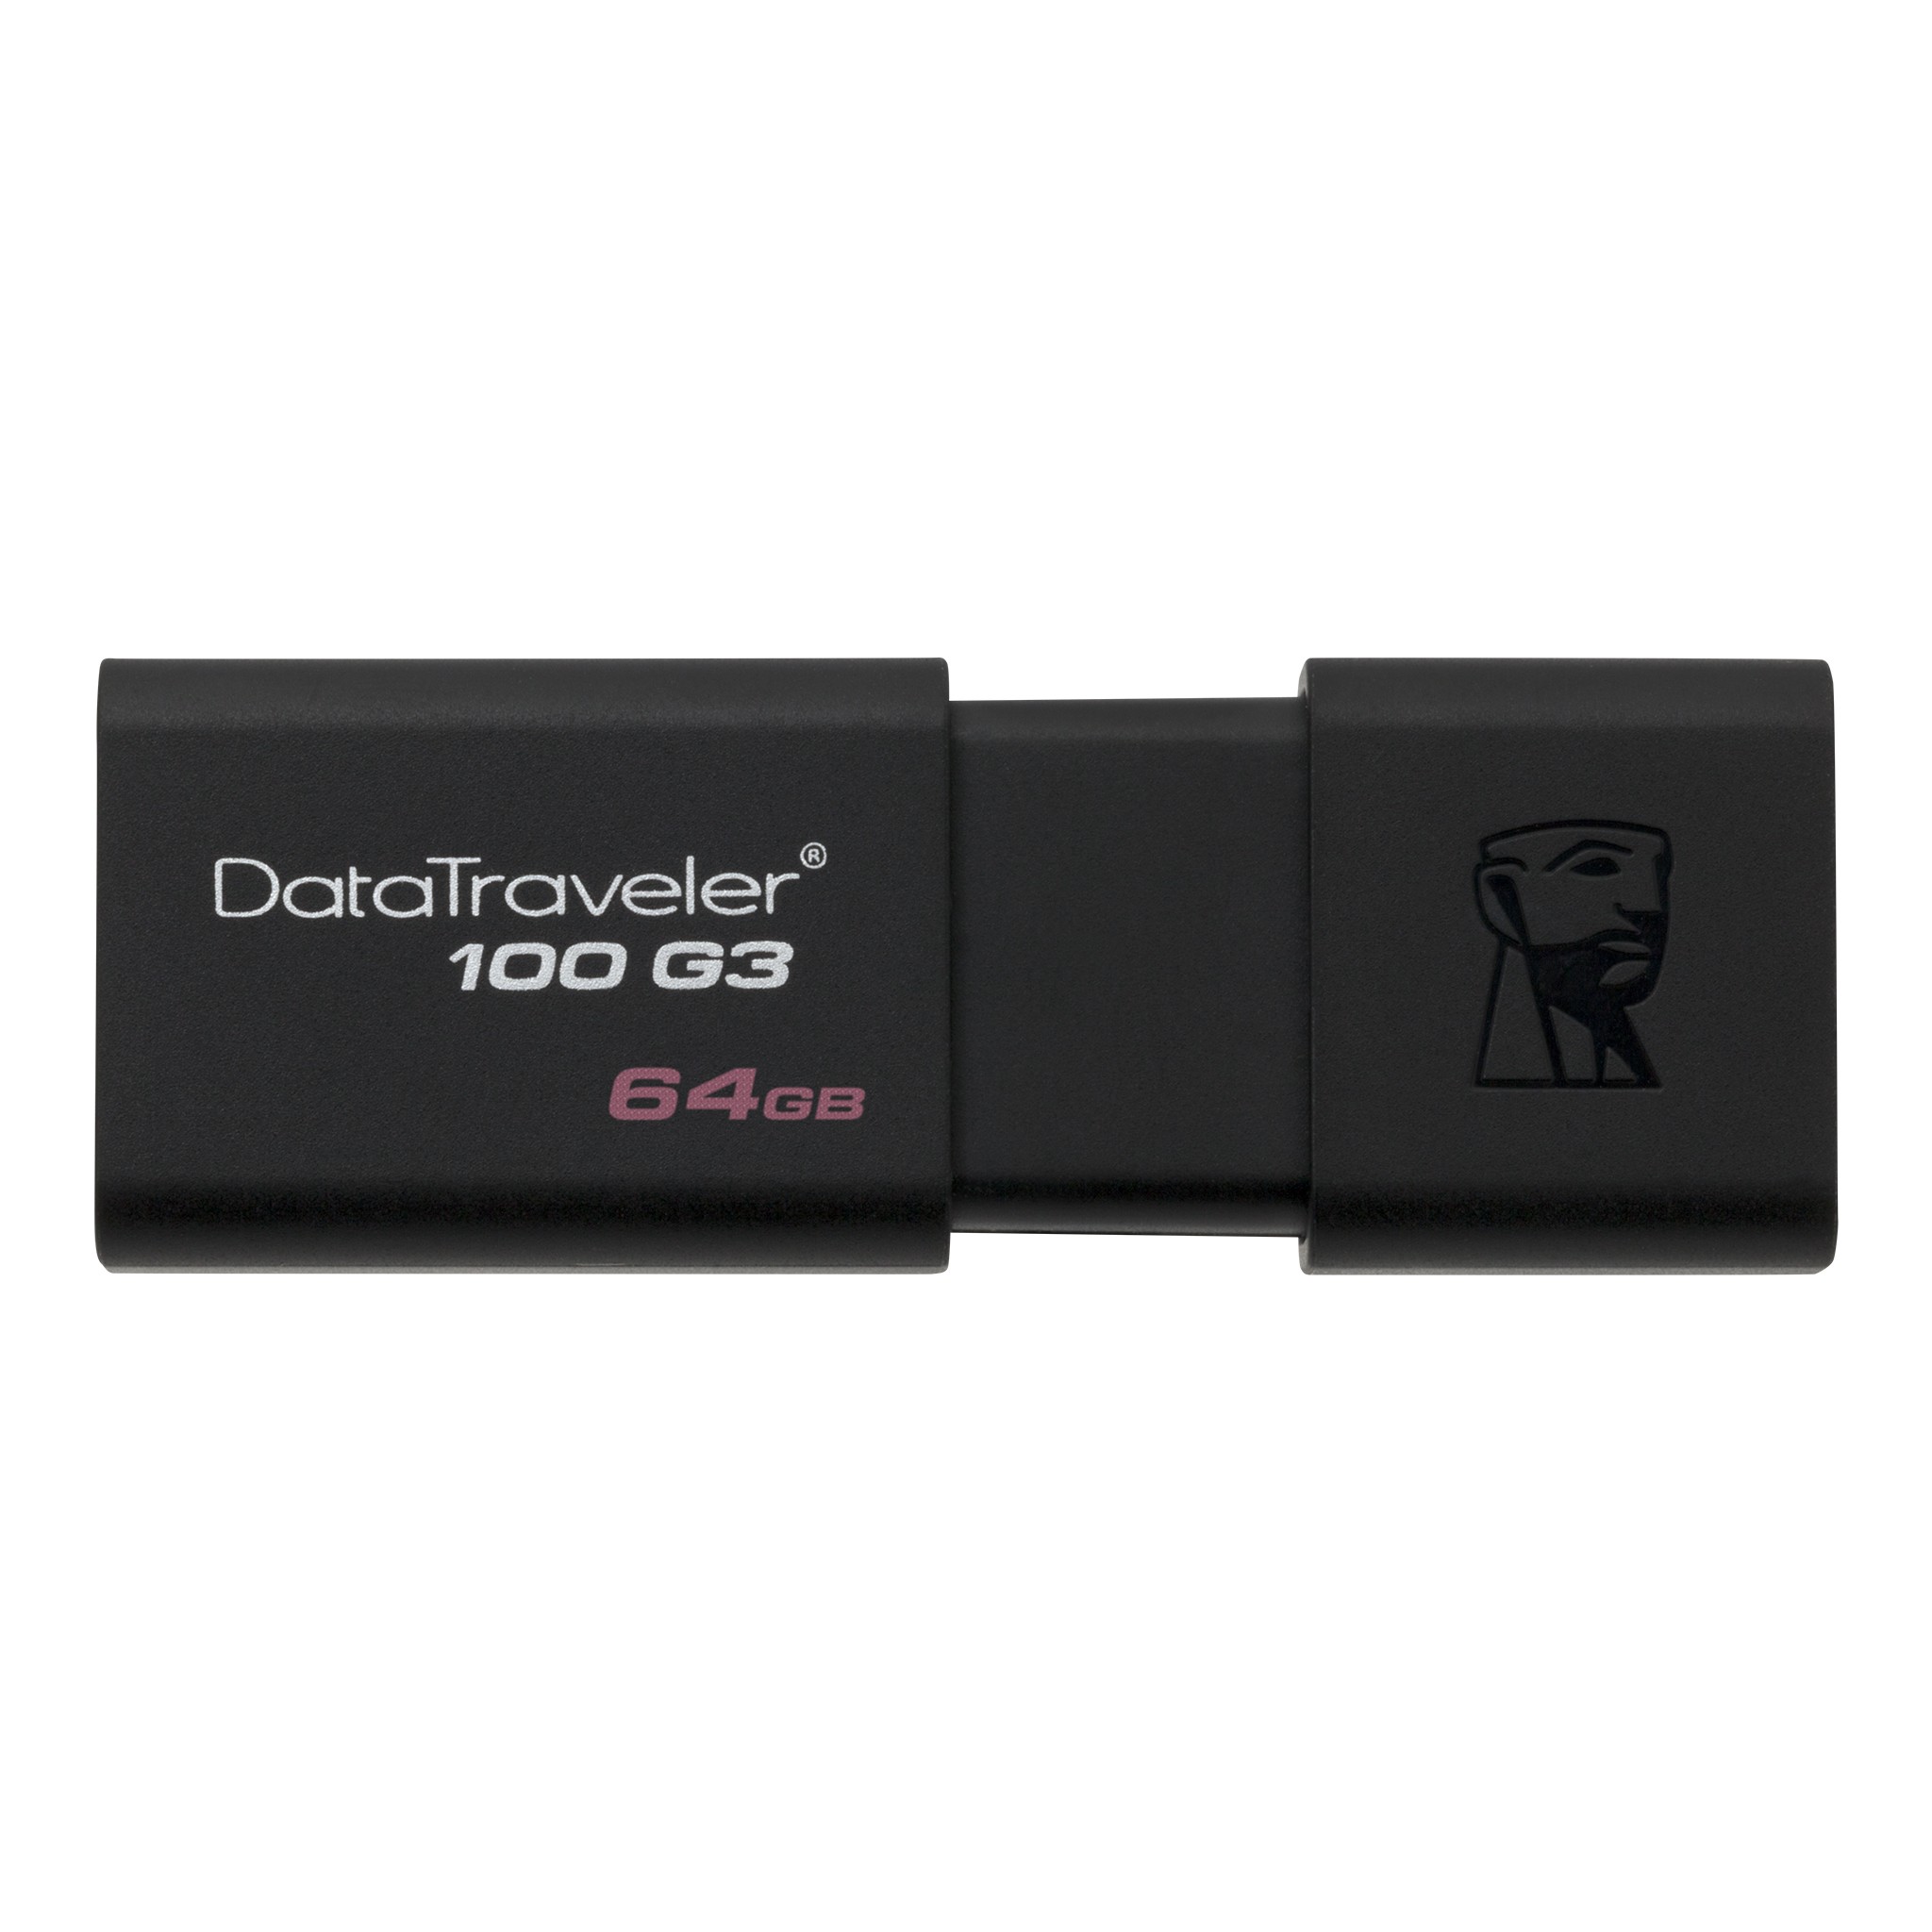 DataTraveler 100 G3 Pen Drive - 16GB-128GB - Kingston Technology